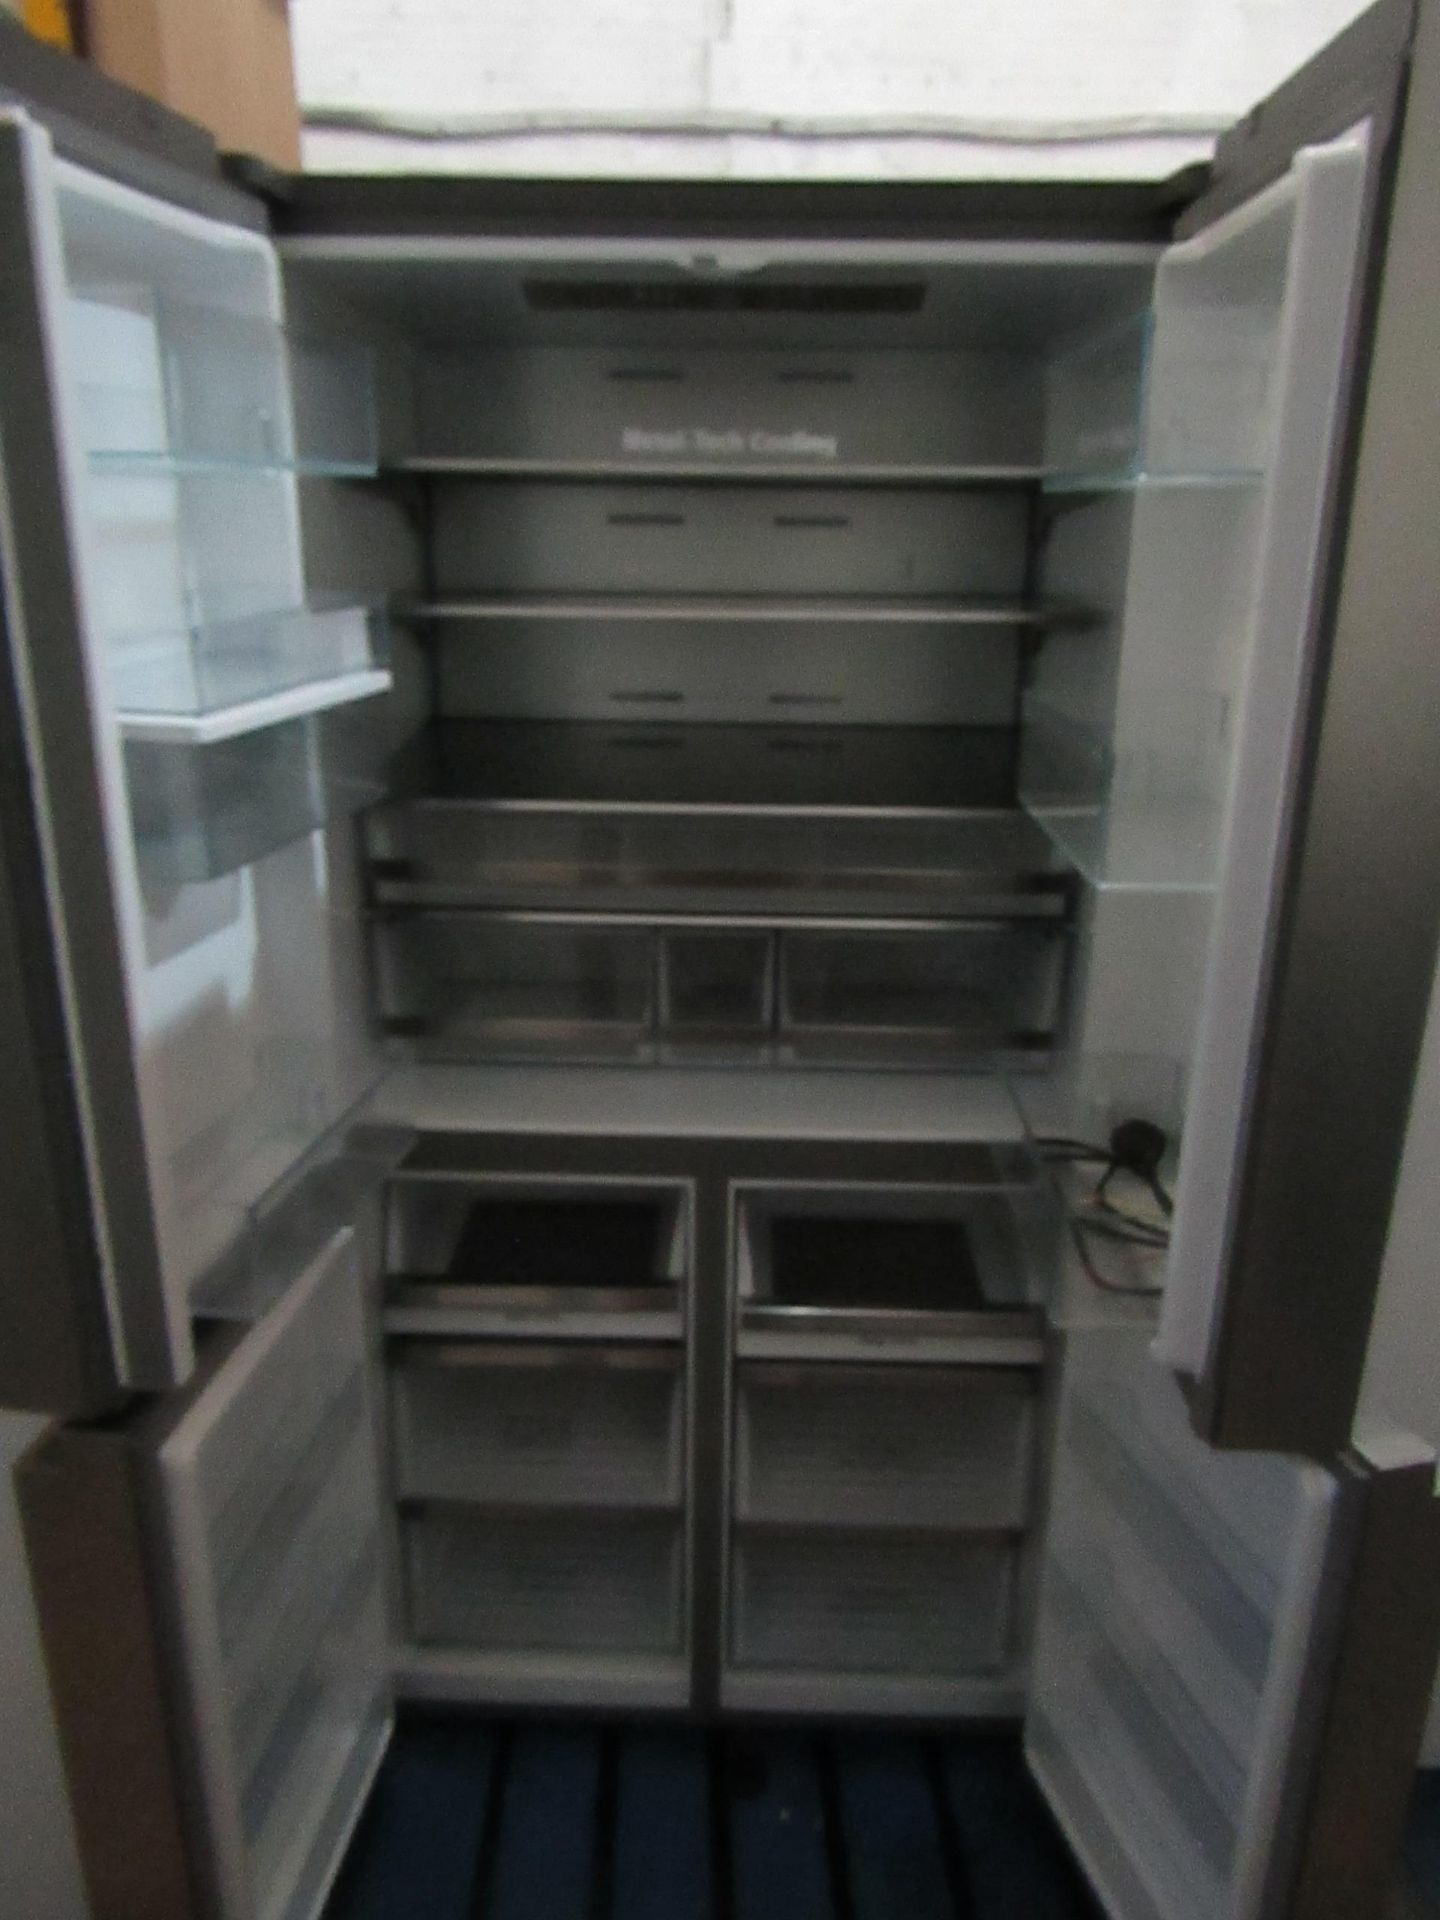 Hisense 4 door american style fridge freezer with water dispoenser, the plug and cord has been - Image 4 of 4